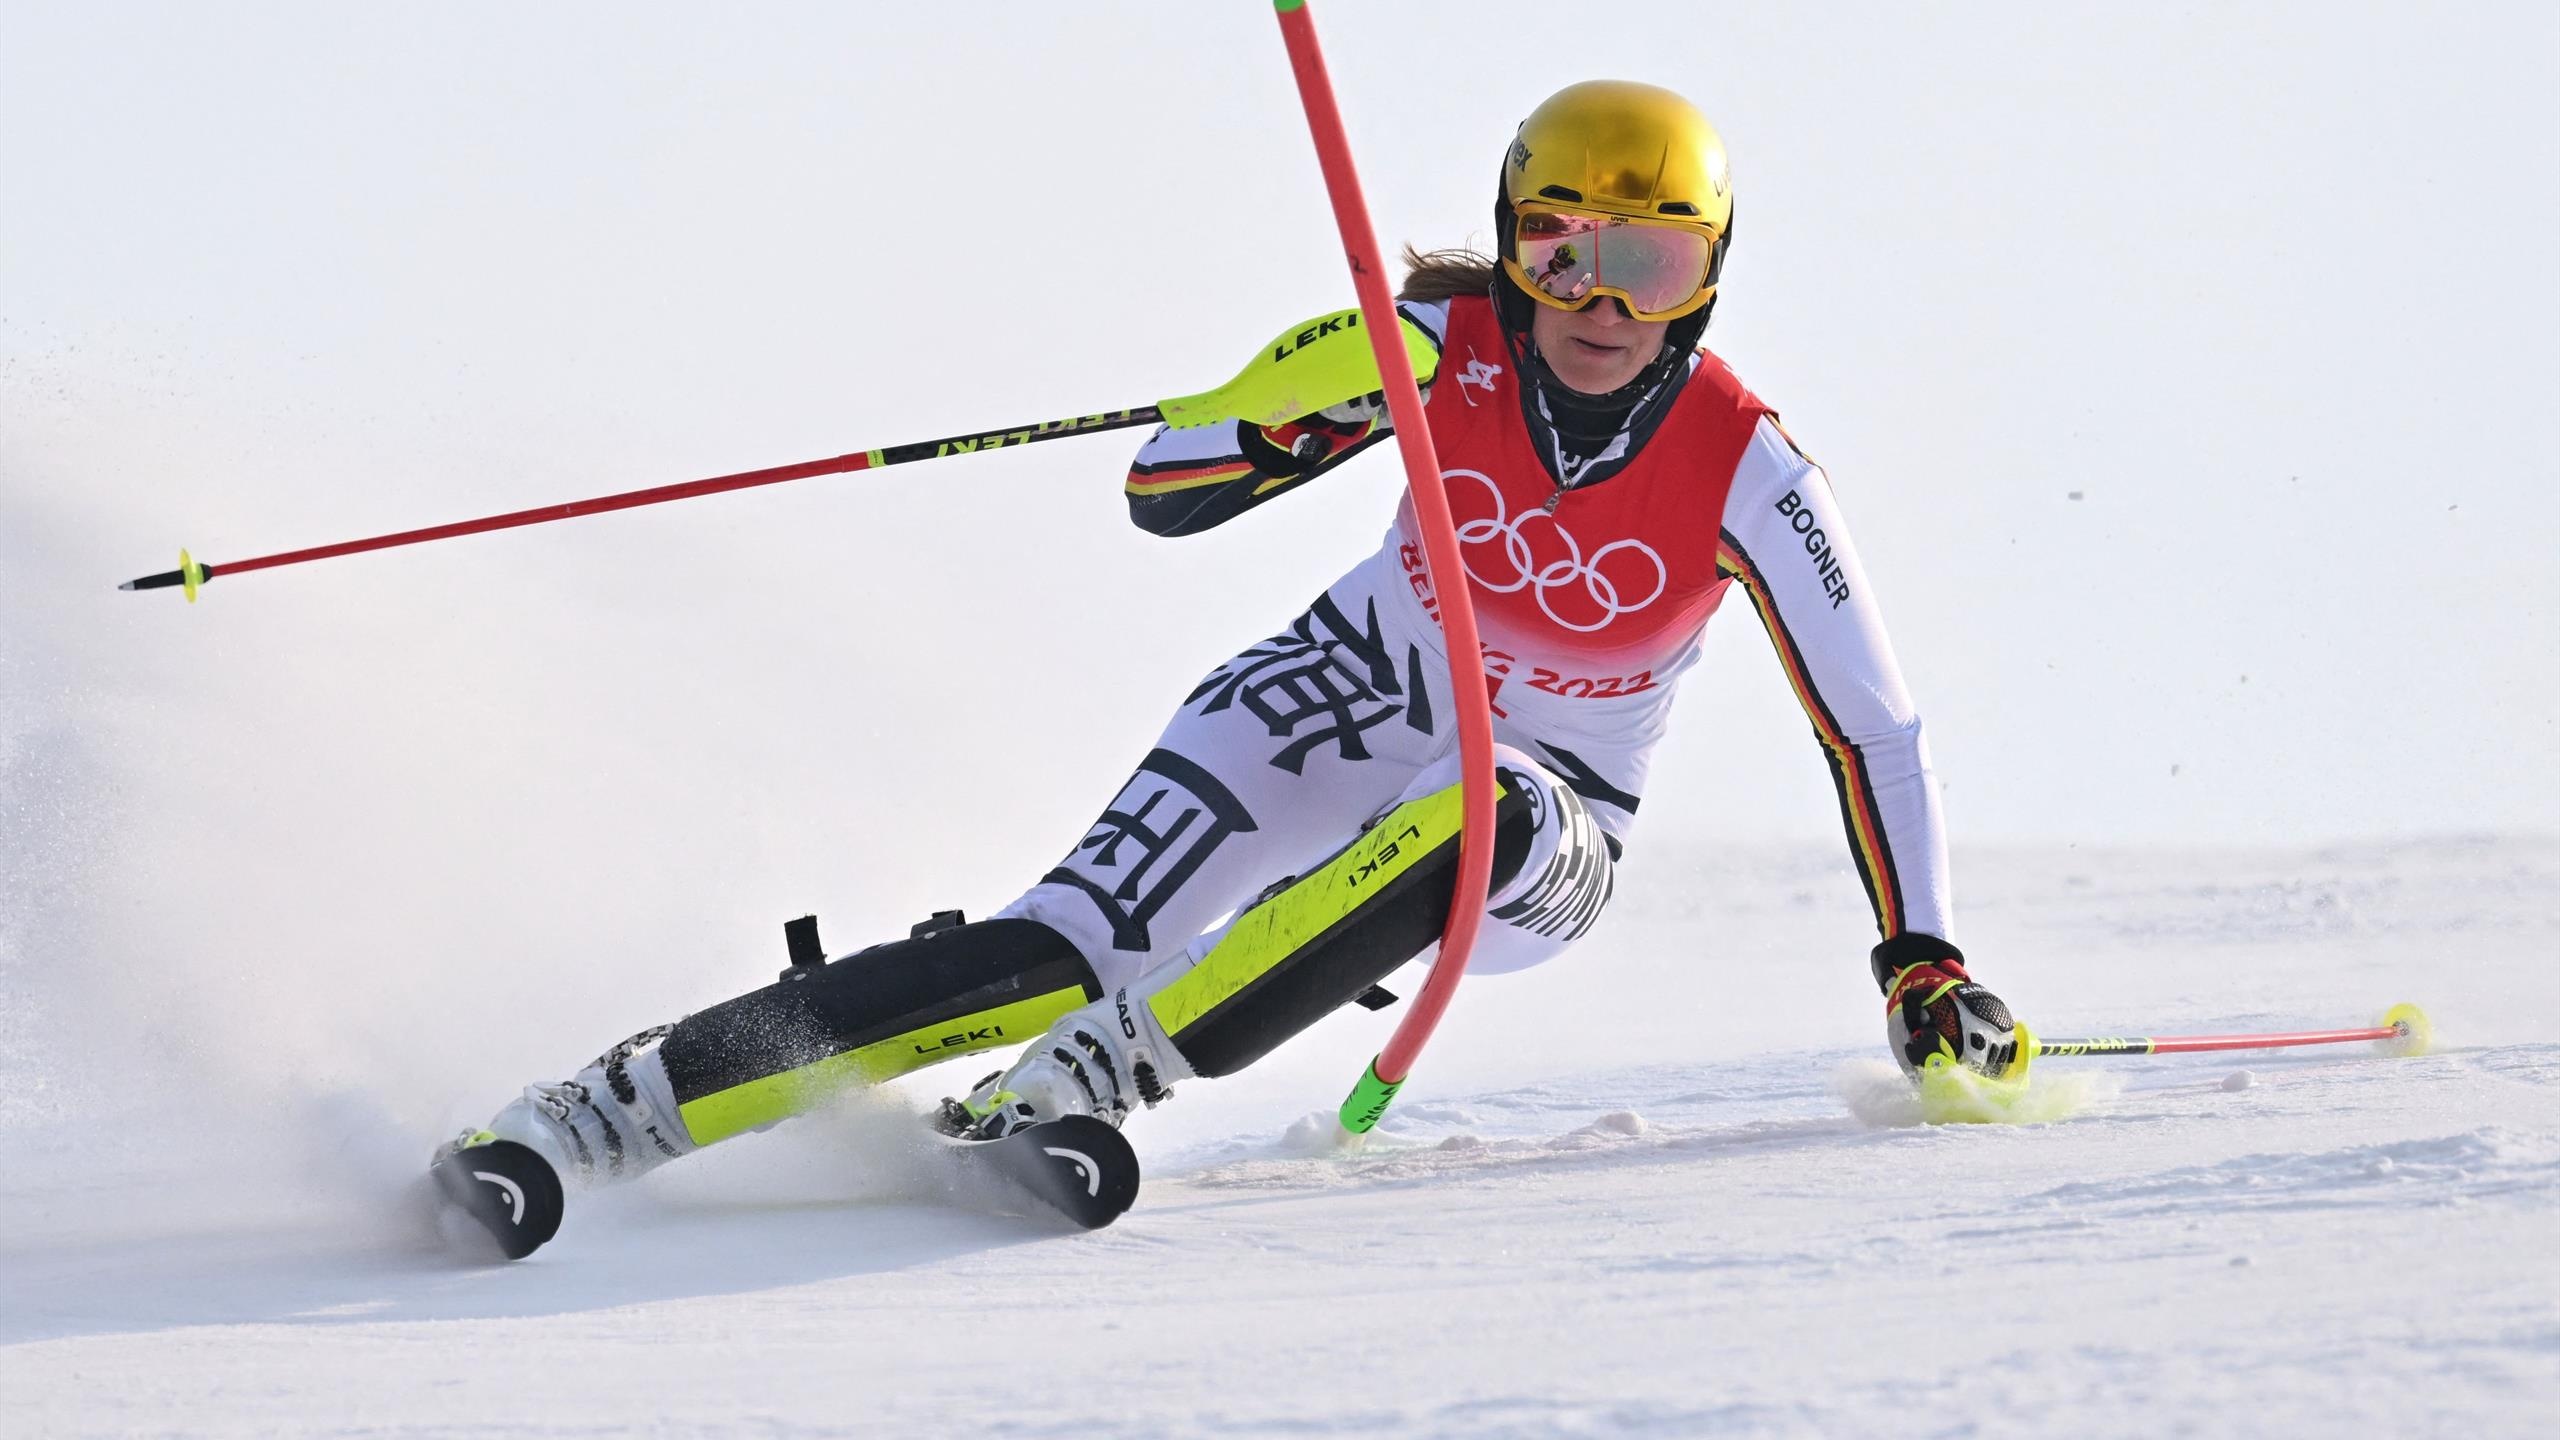 Slalom: Beijing 2022 Winter Olympics, Lena Duerr, Downhill in a wavy course, German team. 2560x1440 HD Wallpaper.